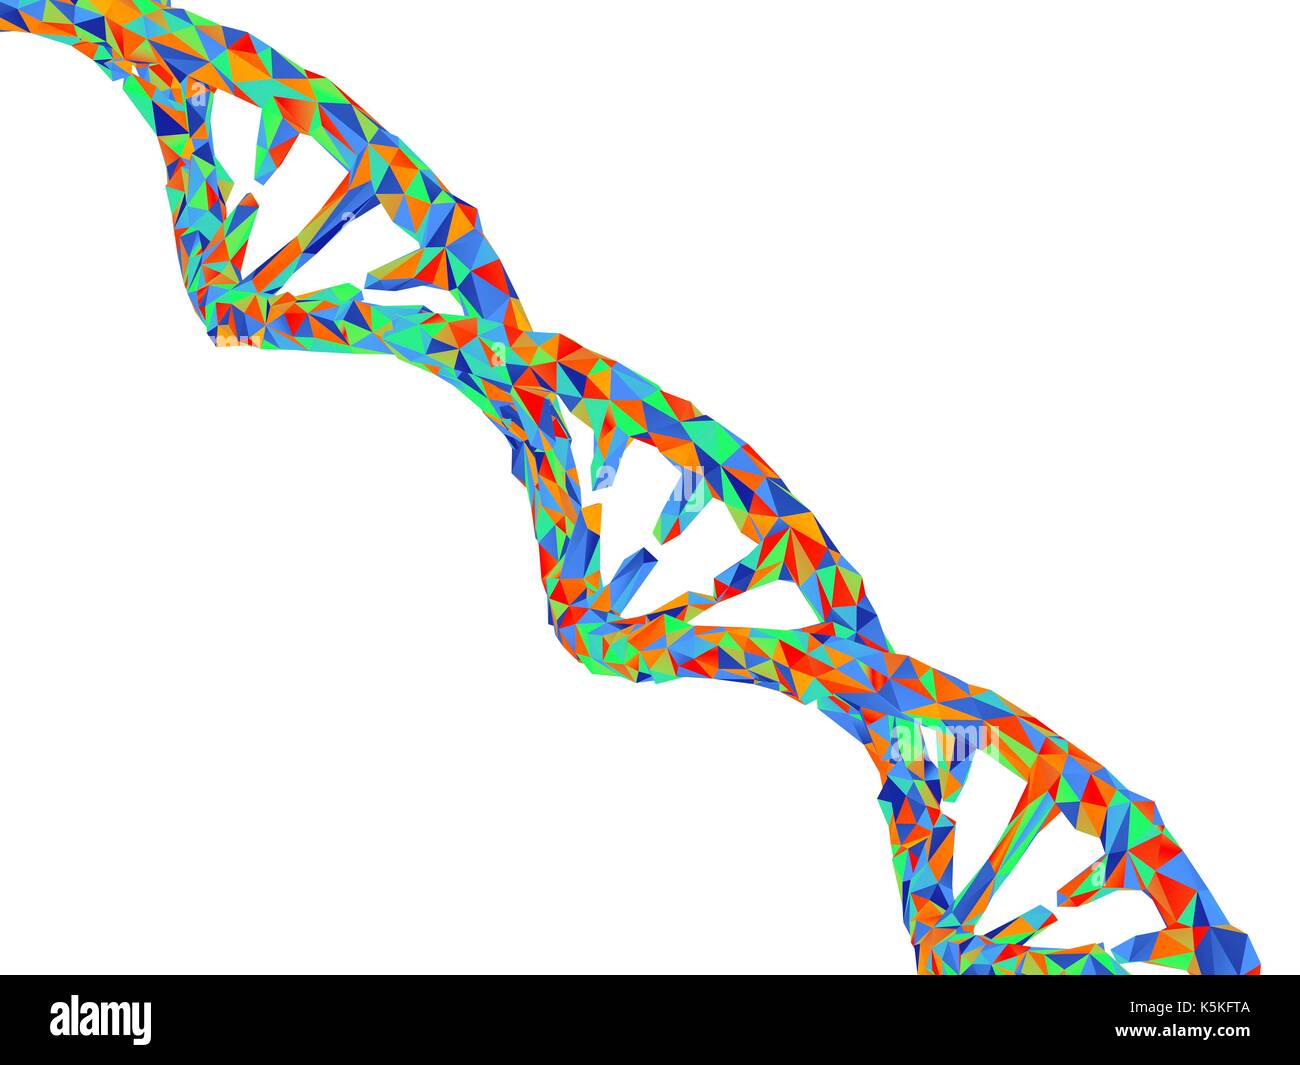 DNA (deoxyribonucleic acid) strand, low polygon style llustration. Stock Photo